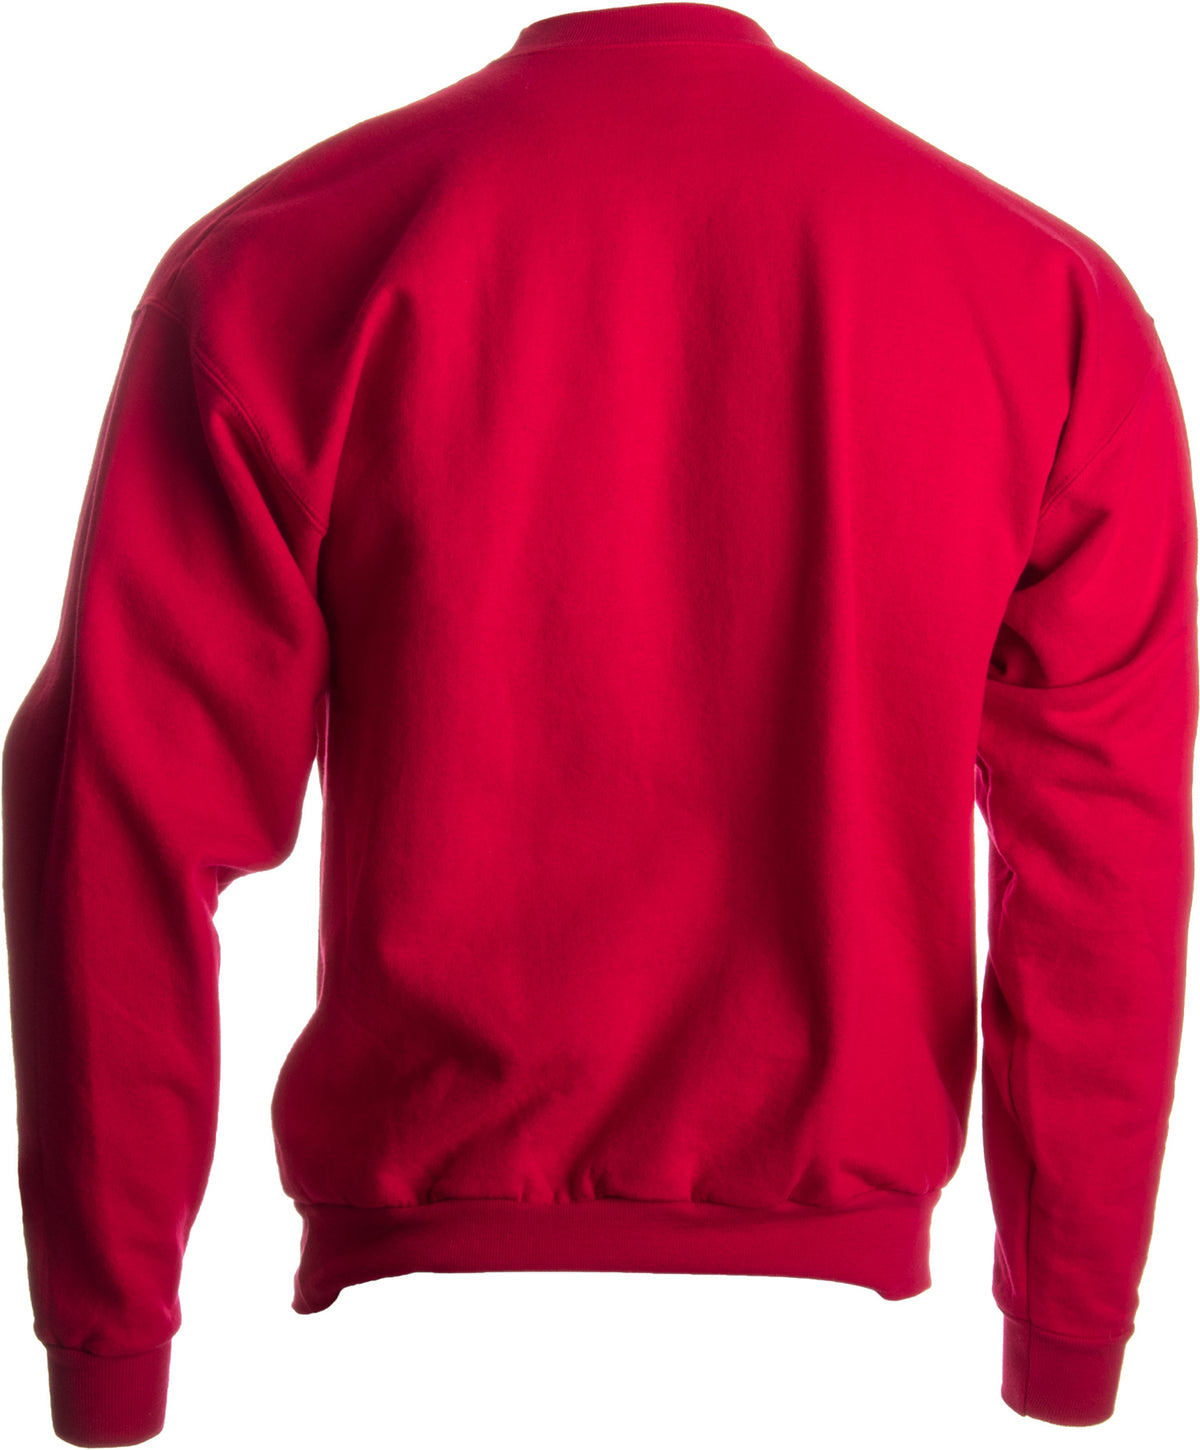 Ann Arbor T-shirt Co. Santa Claus Costume - Novelty Christmas Sweater Holiday Crewneck Sweatshirt - Men's/Unisex